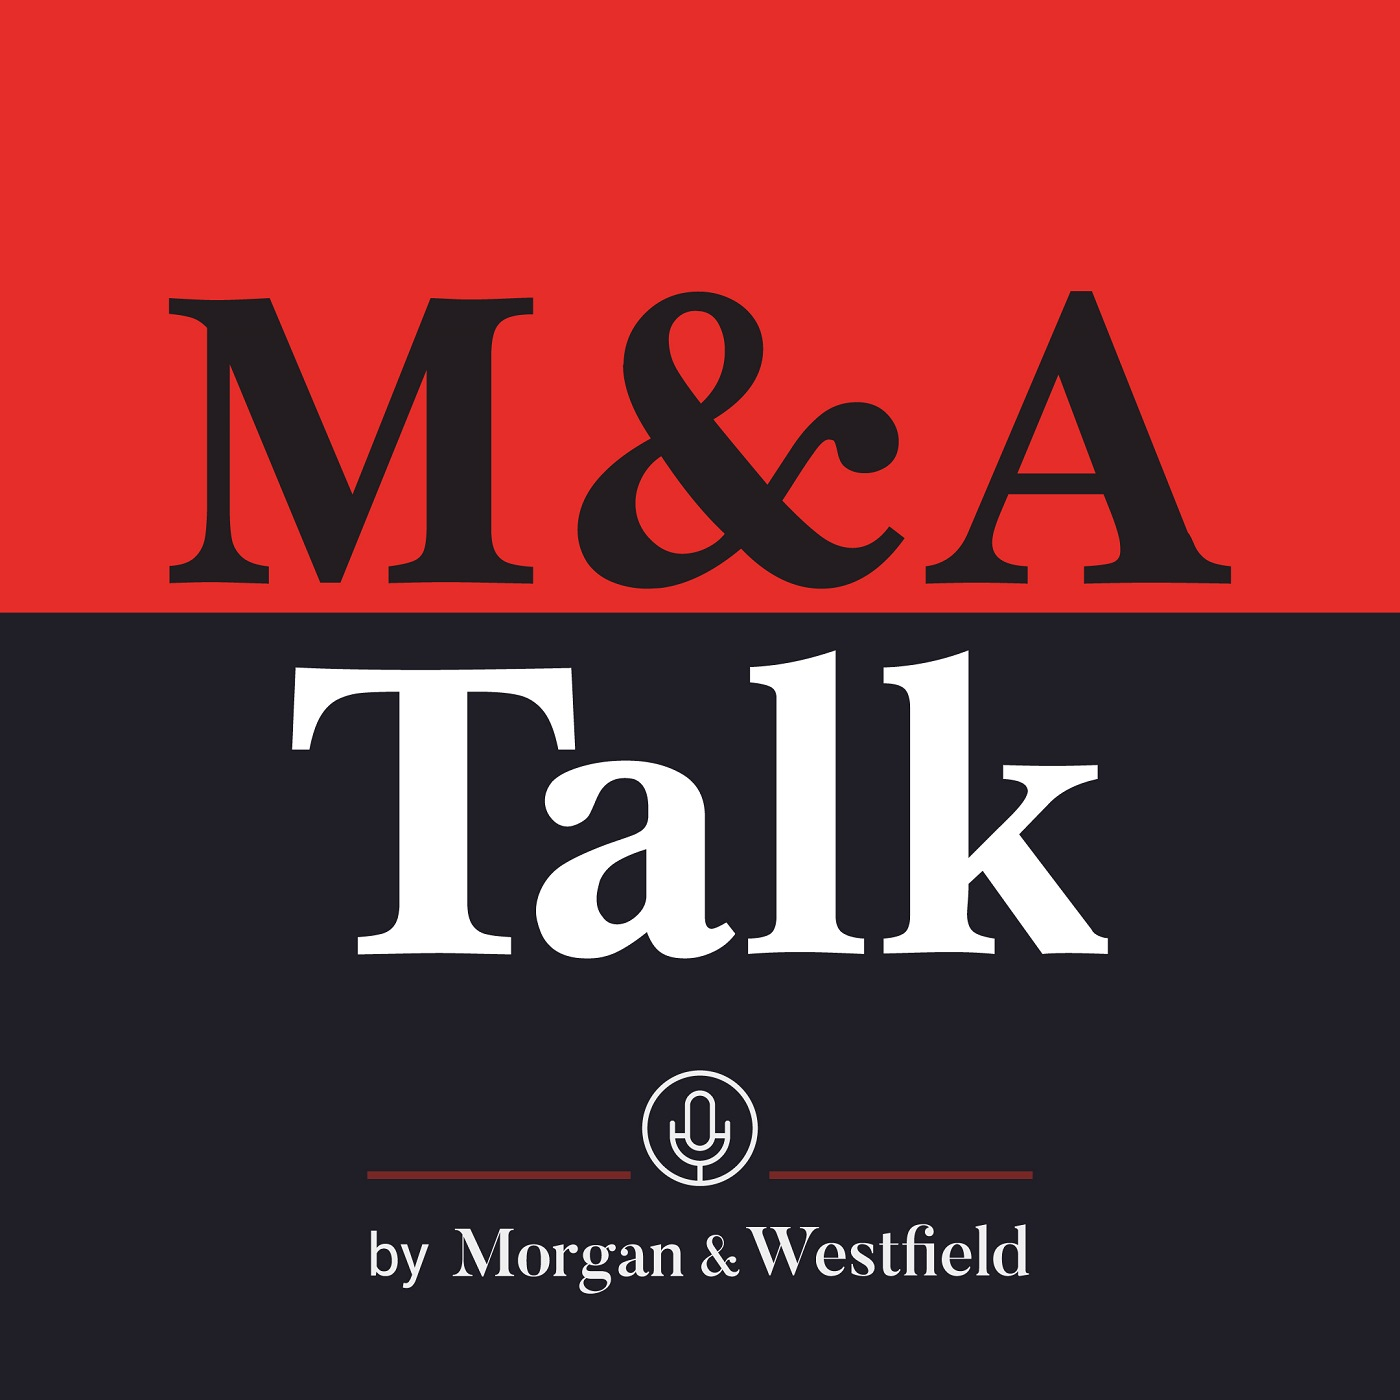 M&A Talk, by Morgan & Westfield